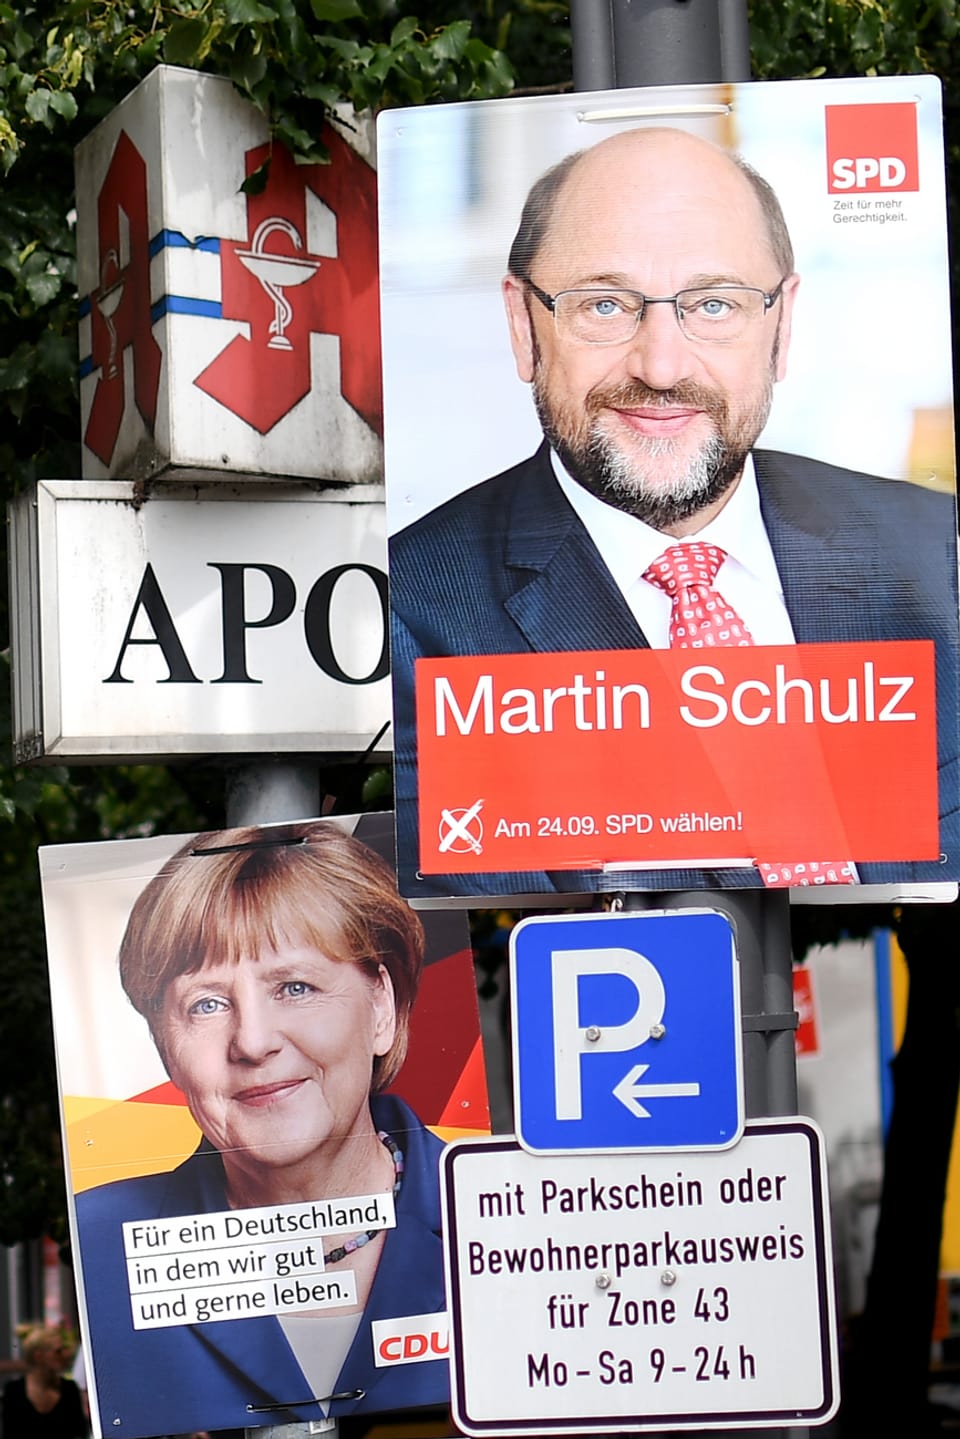 Placats dad Angela Merkel e Martin Schulz vid in pitga cun tavla da parcar ed inscripziuns.